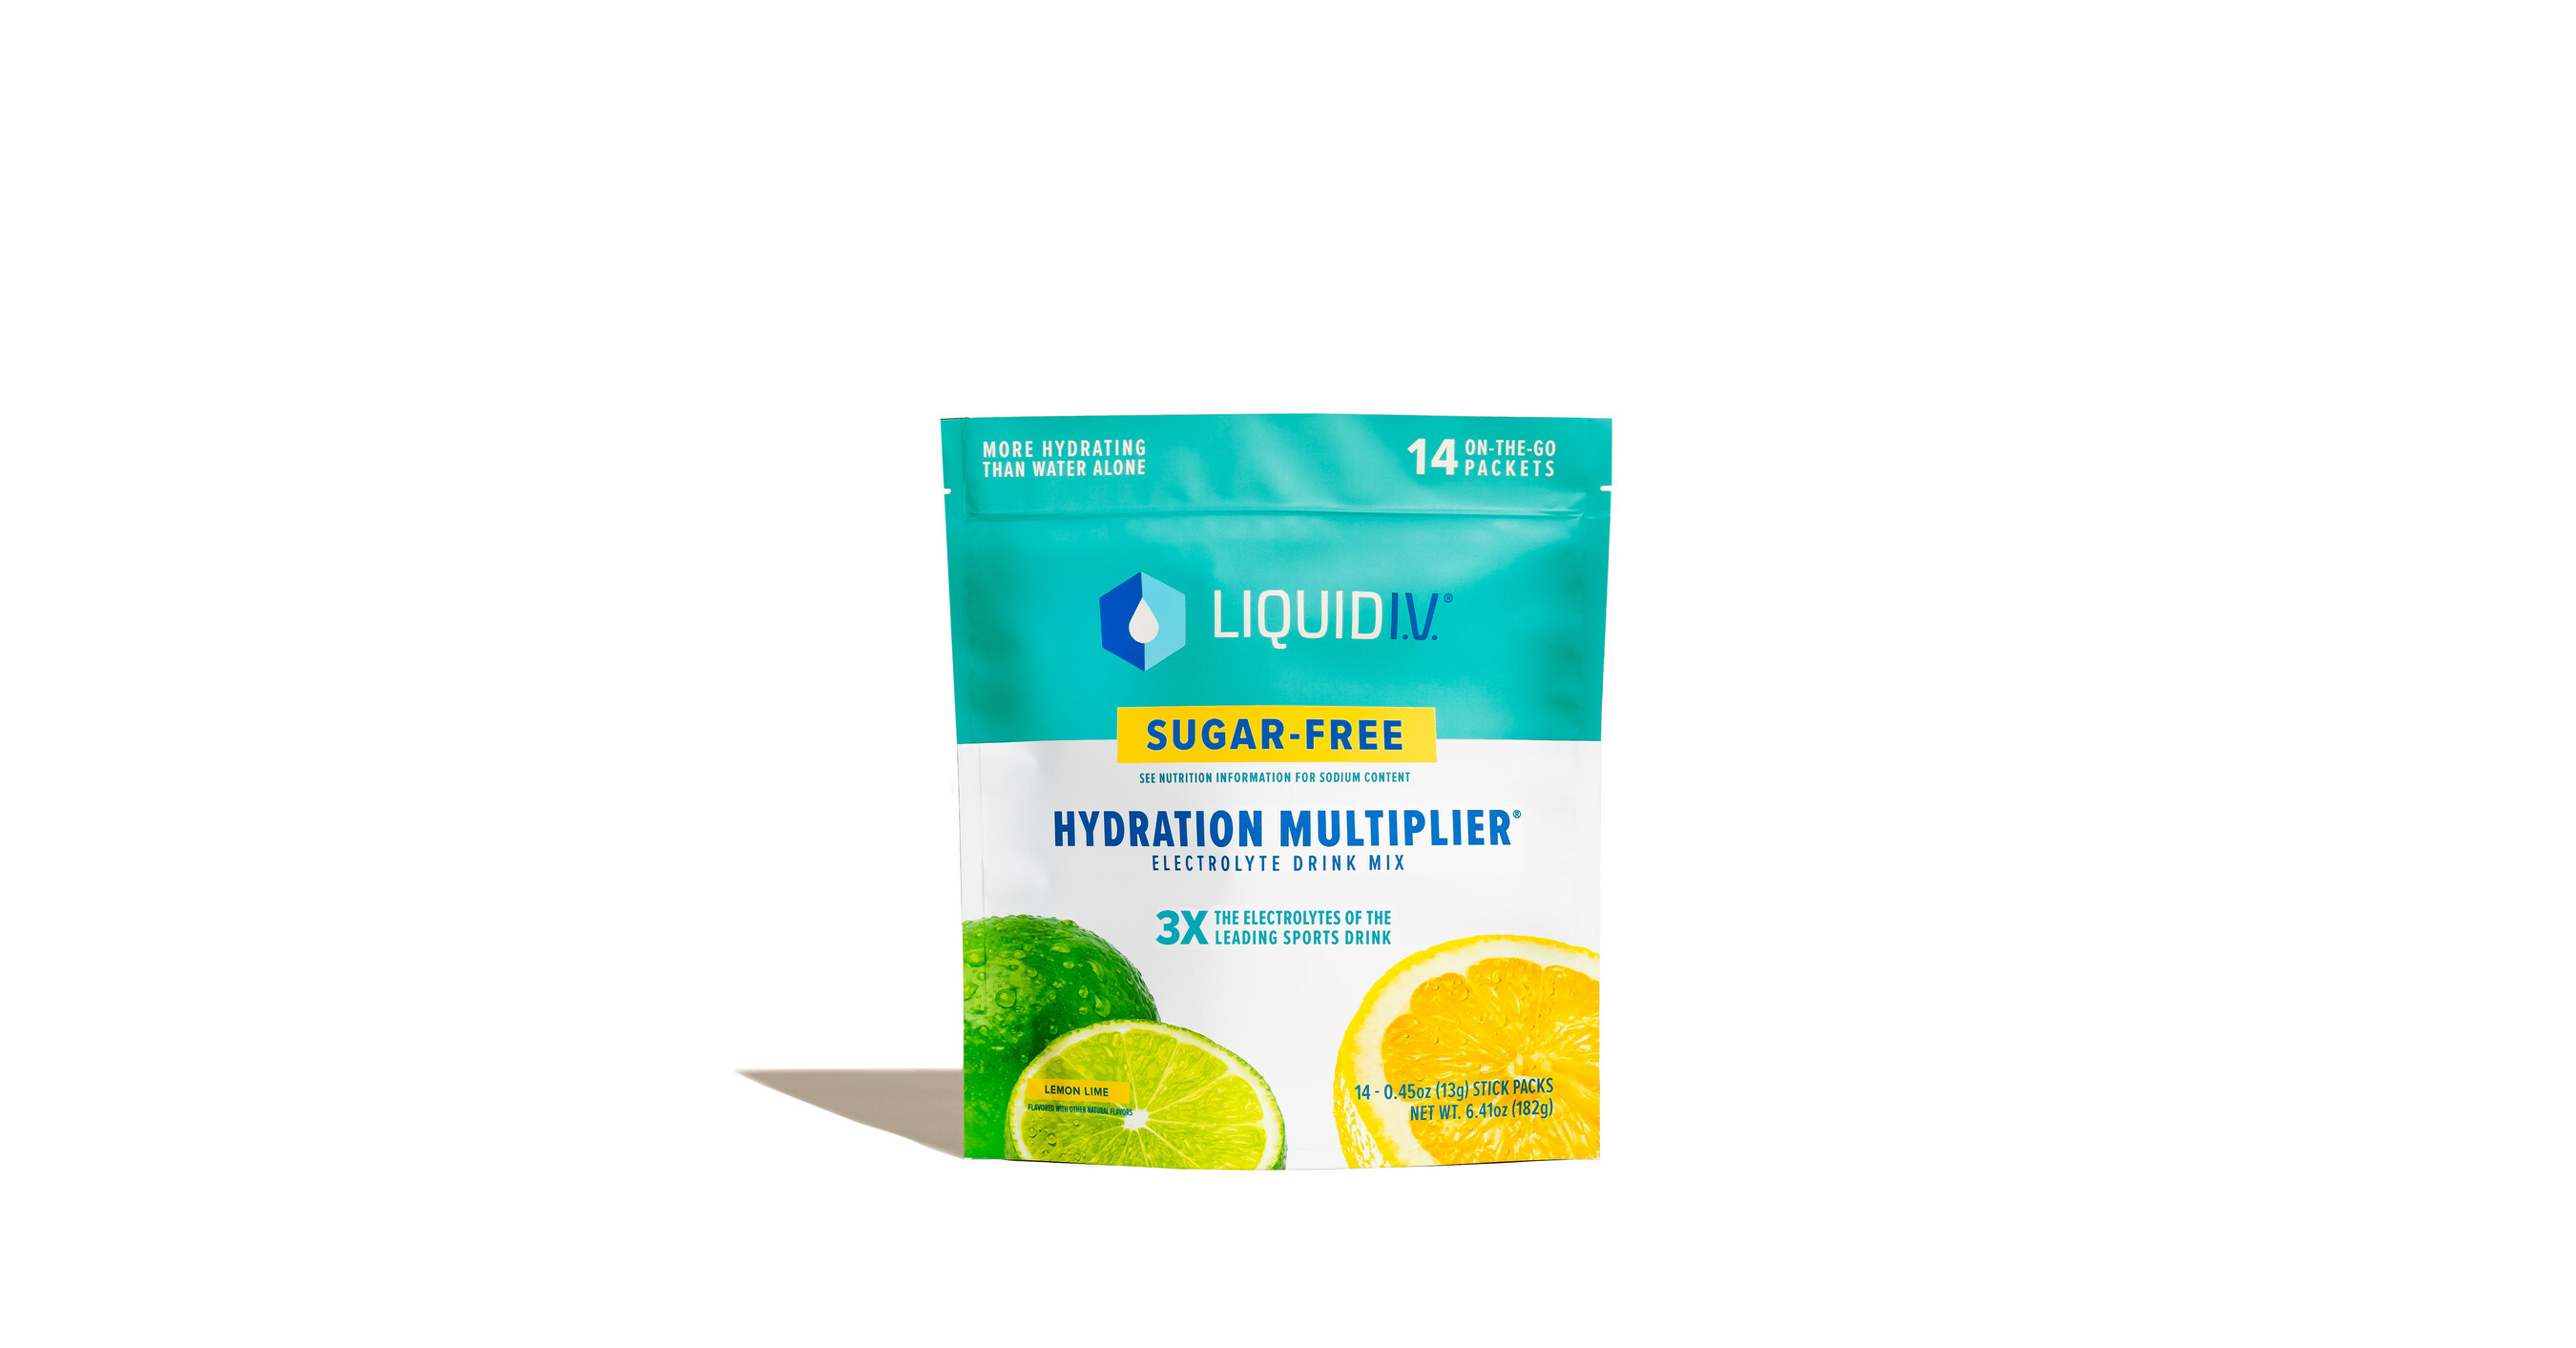 Liquid I.V. Unveils Innovative Hydration Multiplier Sugar-Free Product